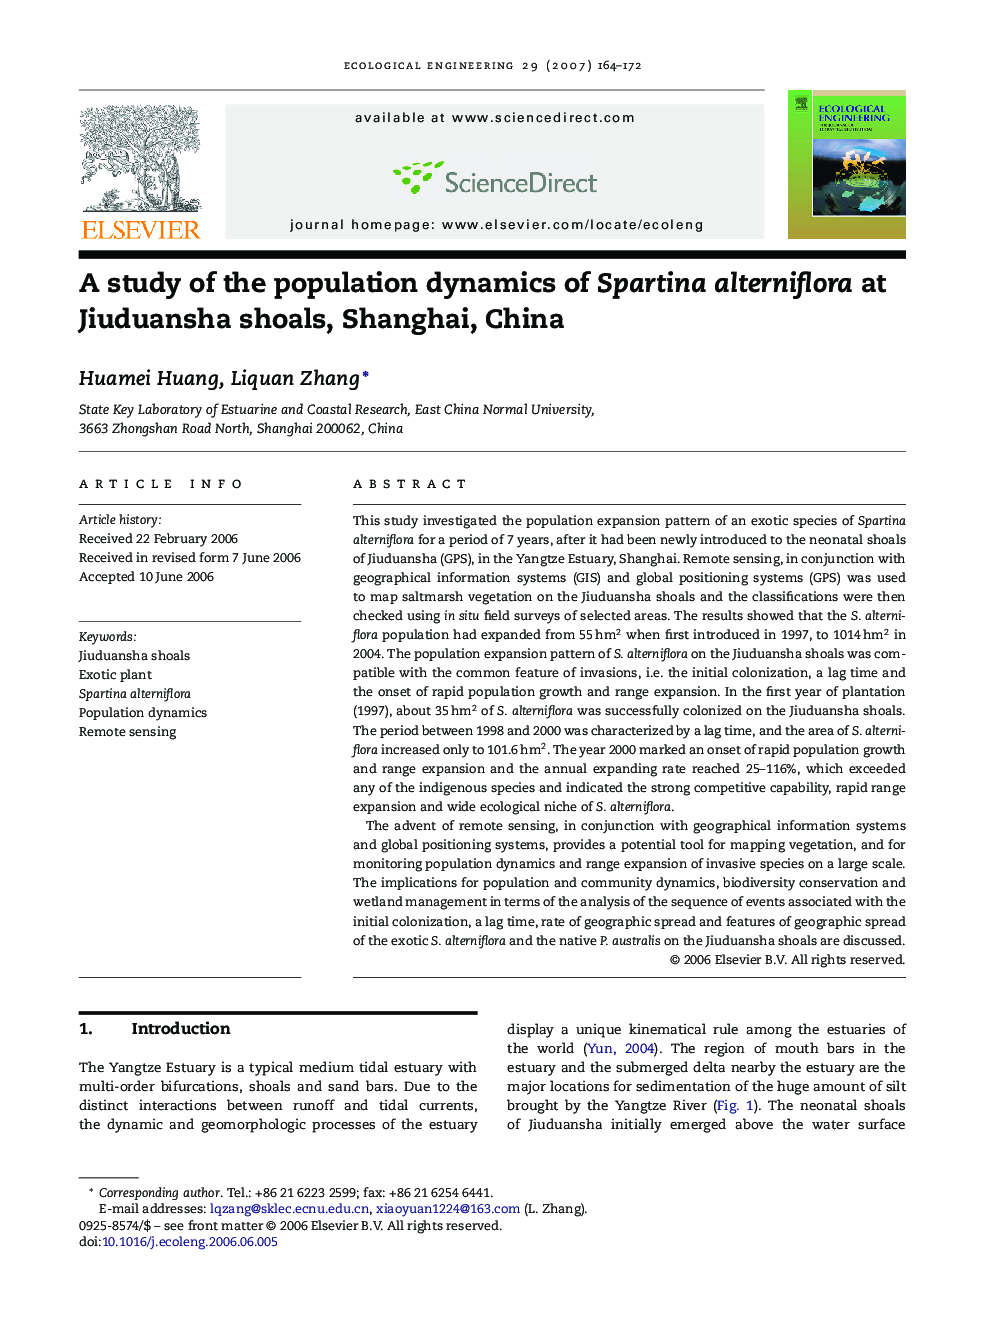 A study of the population dynamics of Spartina alterniflora at Jiuduansha shoals, Shanghai, China